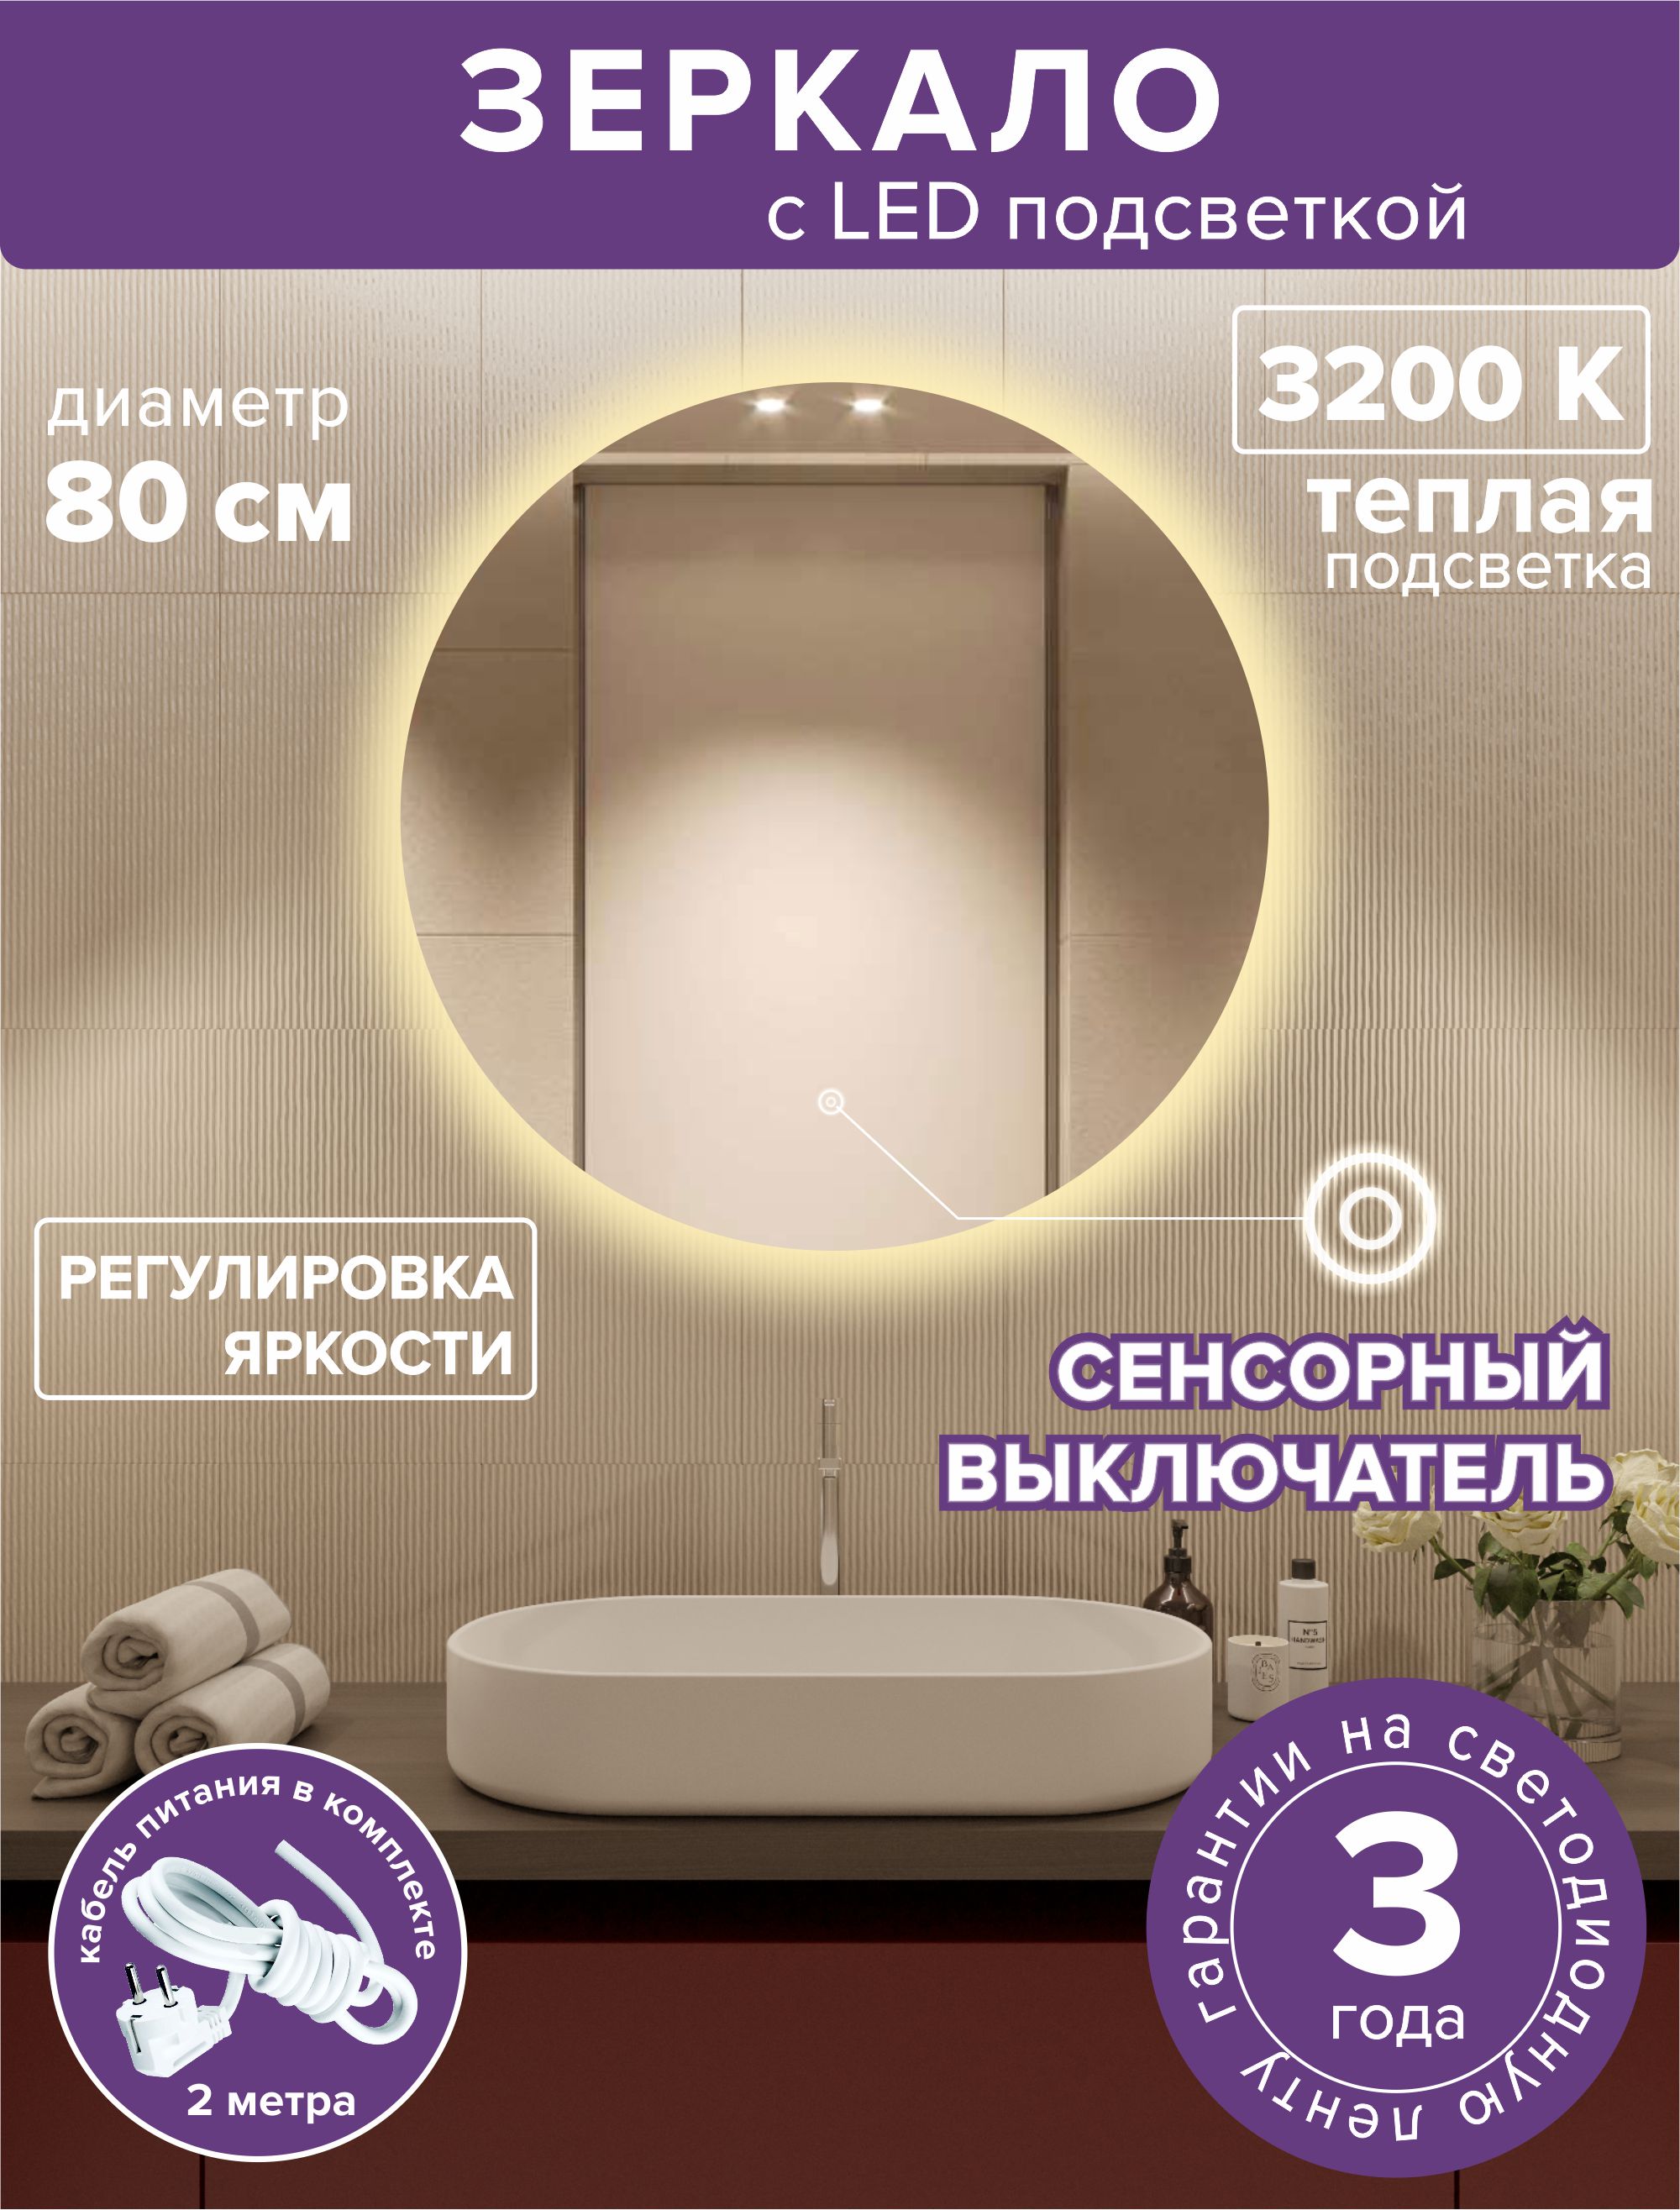 Зеркало для ванной Alfa Mirrors MNa-8Vt круглое, теплая подсветка, 80см led pls 200 20m 240v ww bl f w o белая теплая пров белый теплый flash без силового шнура